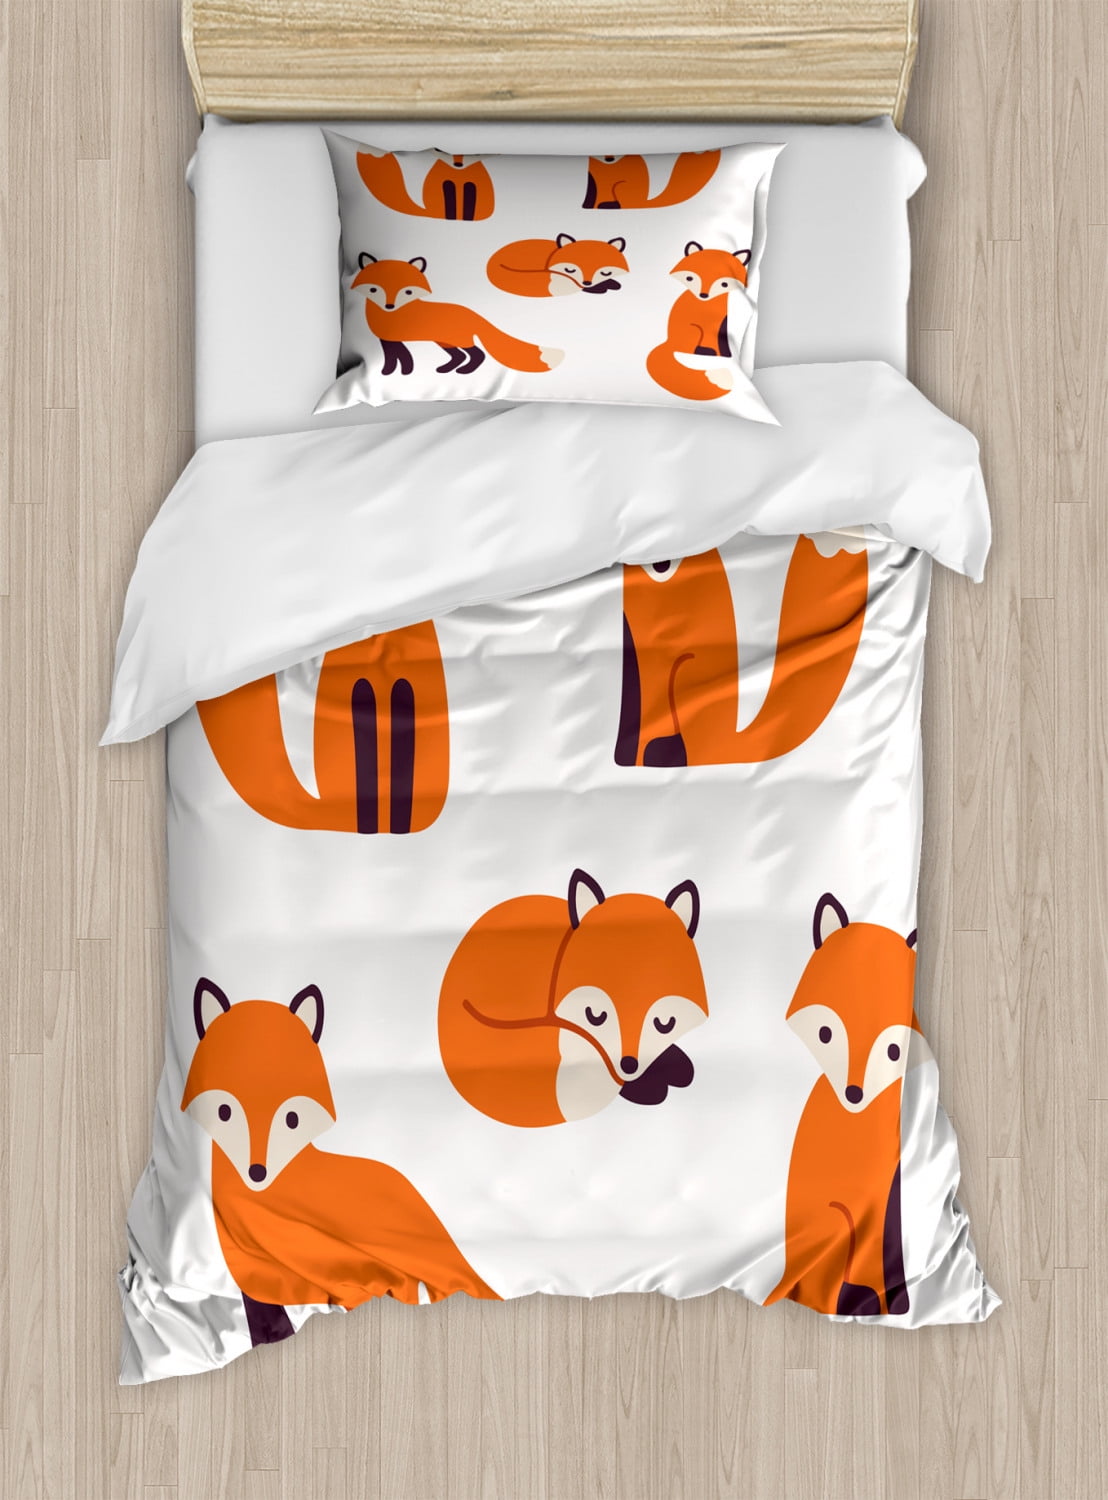 Cottonight Yellow Fox Duvet Cover Twin Kids Bedding Sets Fox Cotton Bedding for Boys Girls Cartoon Super Soft 